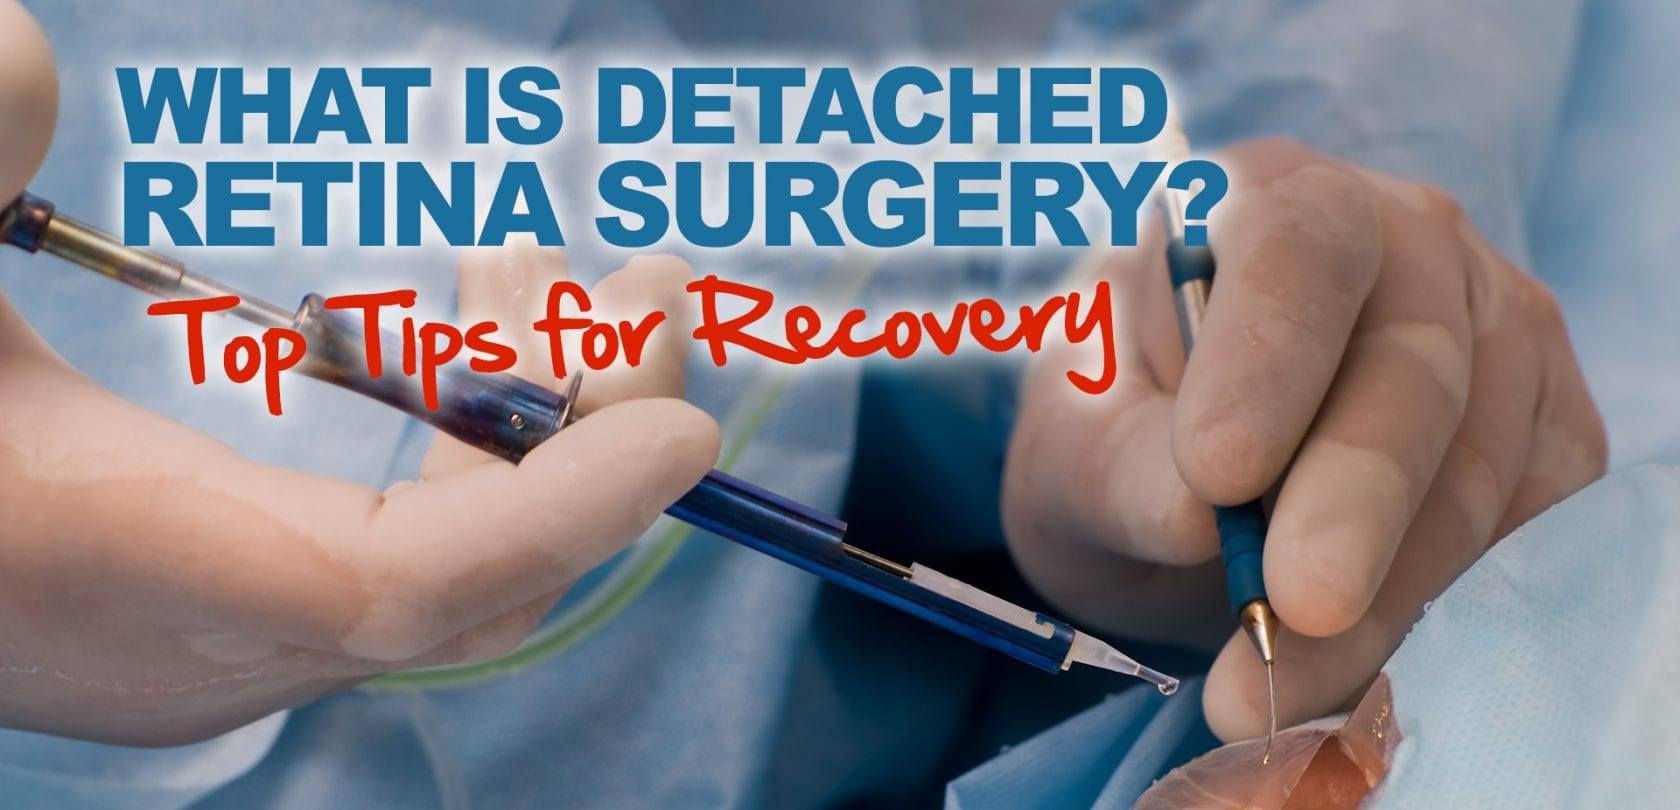 retina reattachment surgery